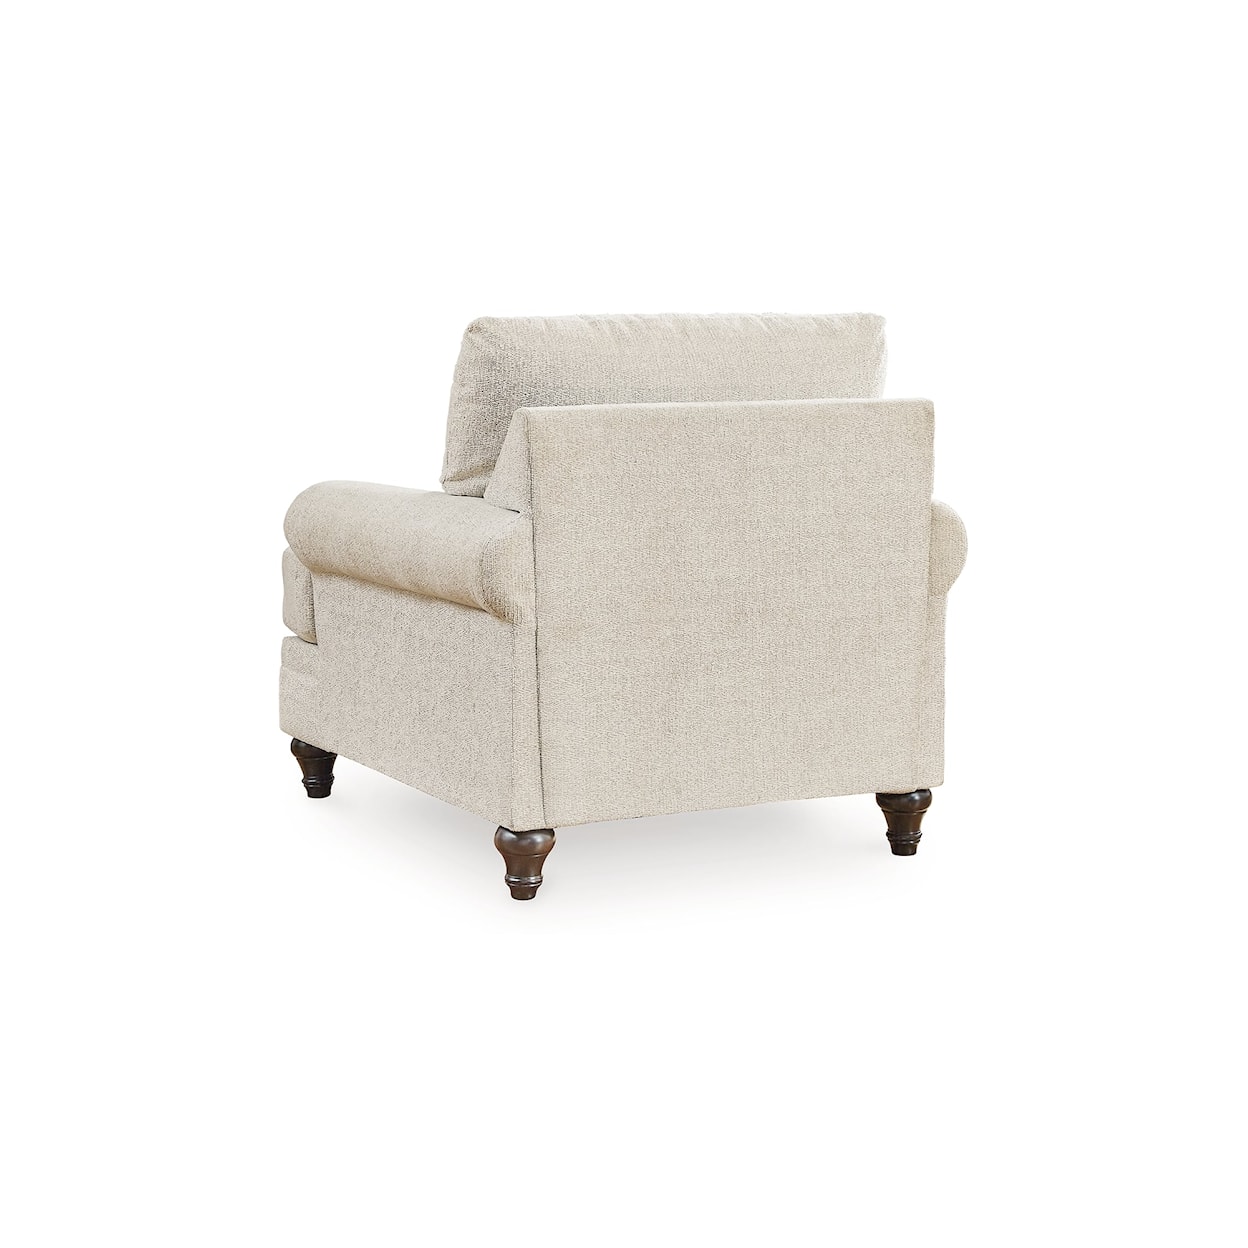 Ashley Furniture Signature Design Valerani Chair